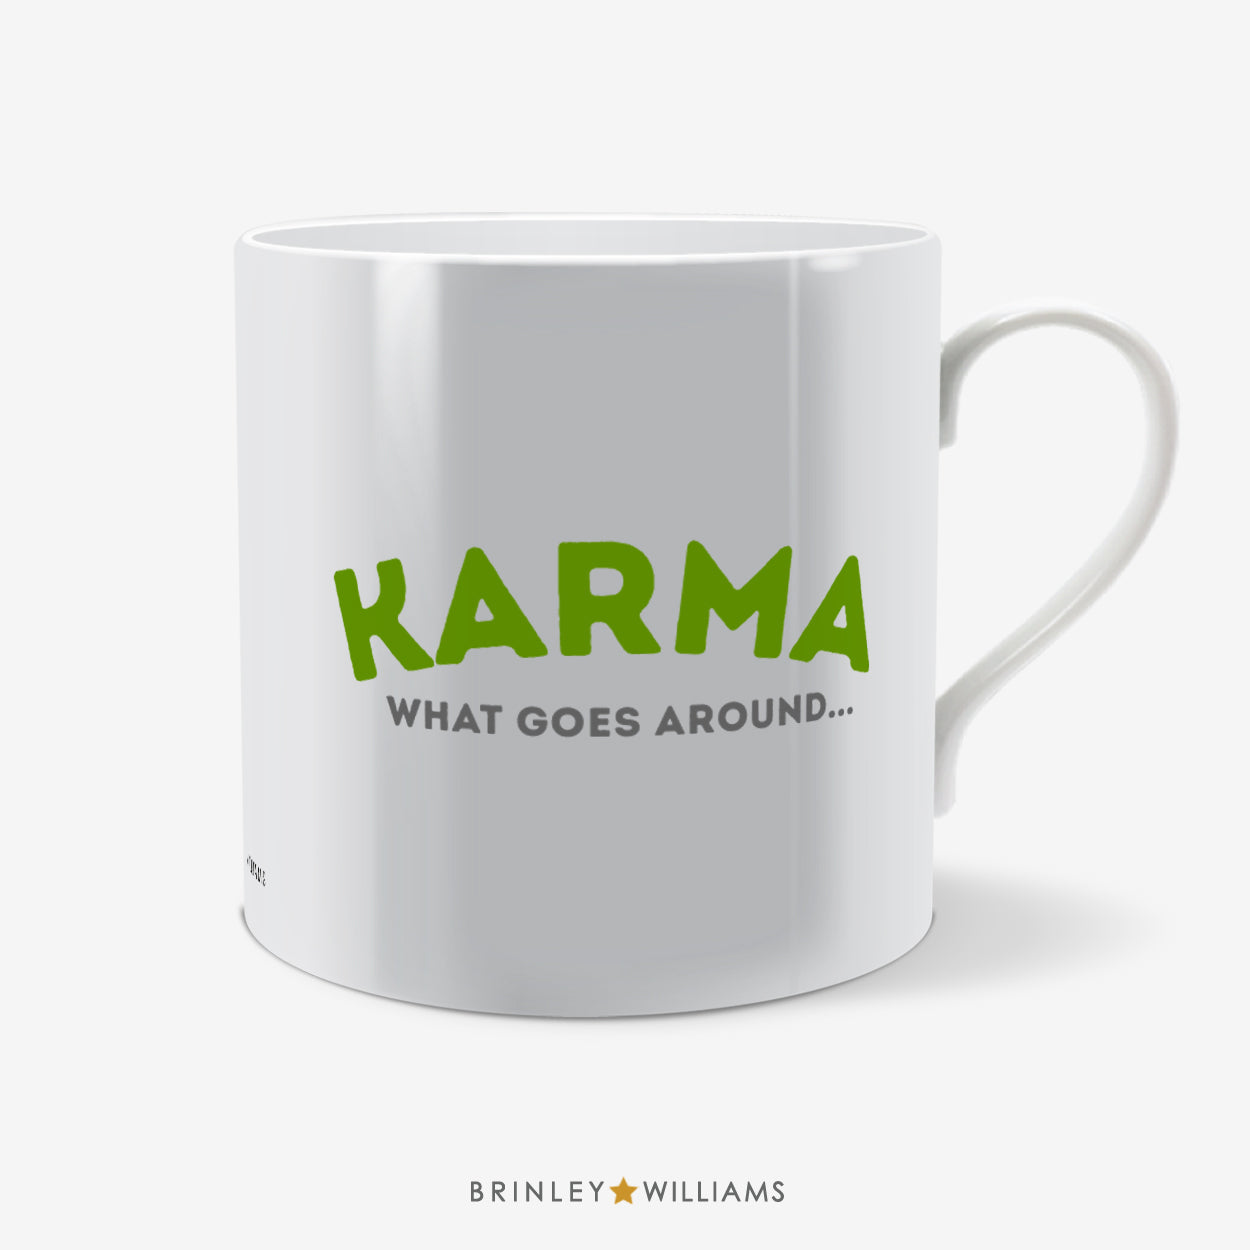 Karma - what goes around Fun Mug - Green